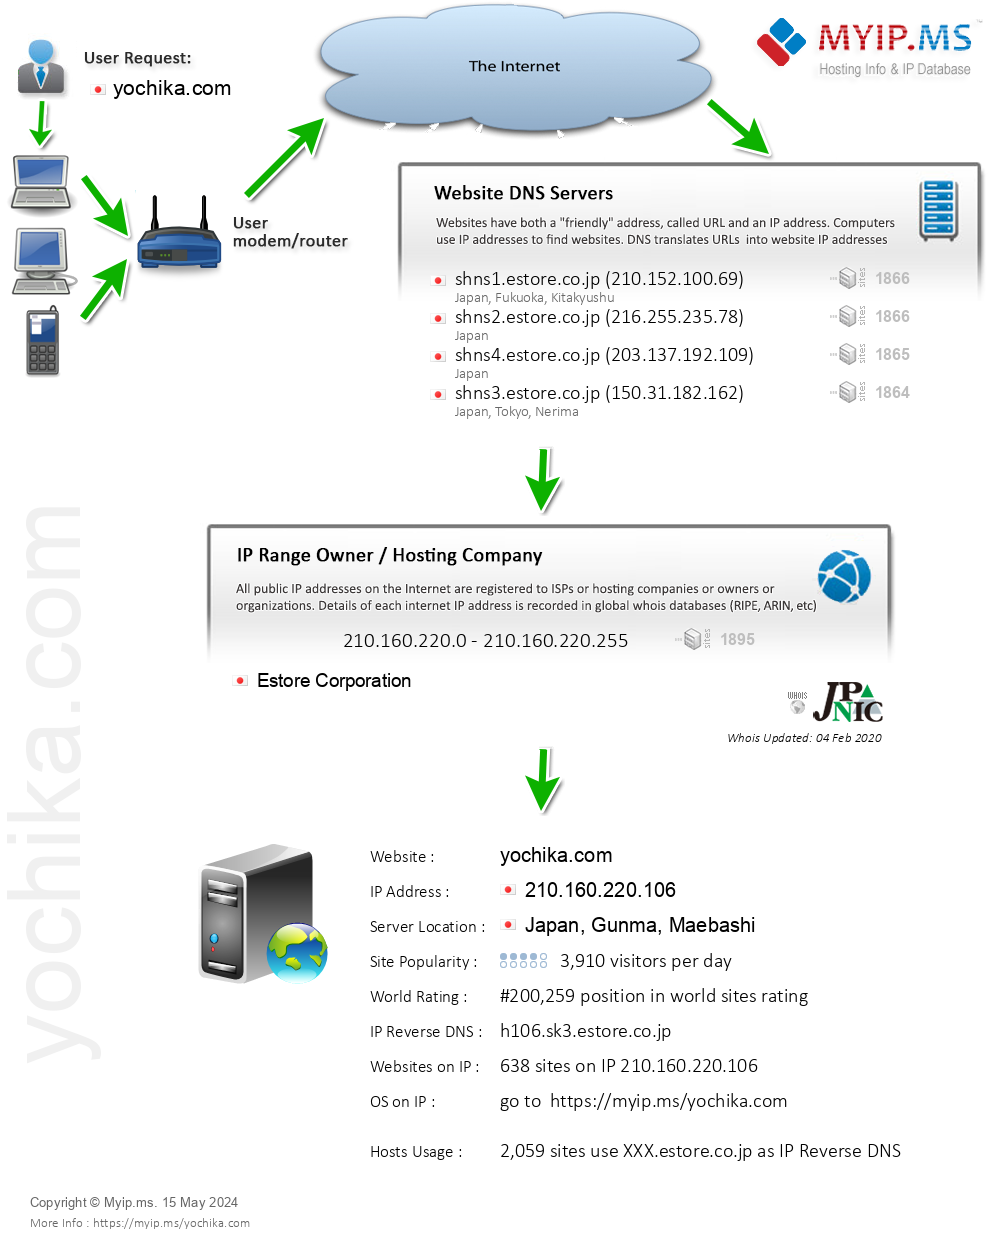 Yochika.com - Website Hosting Visual IP Diagram